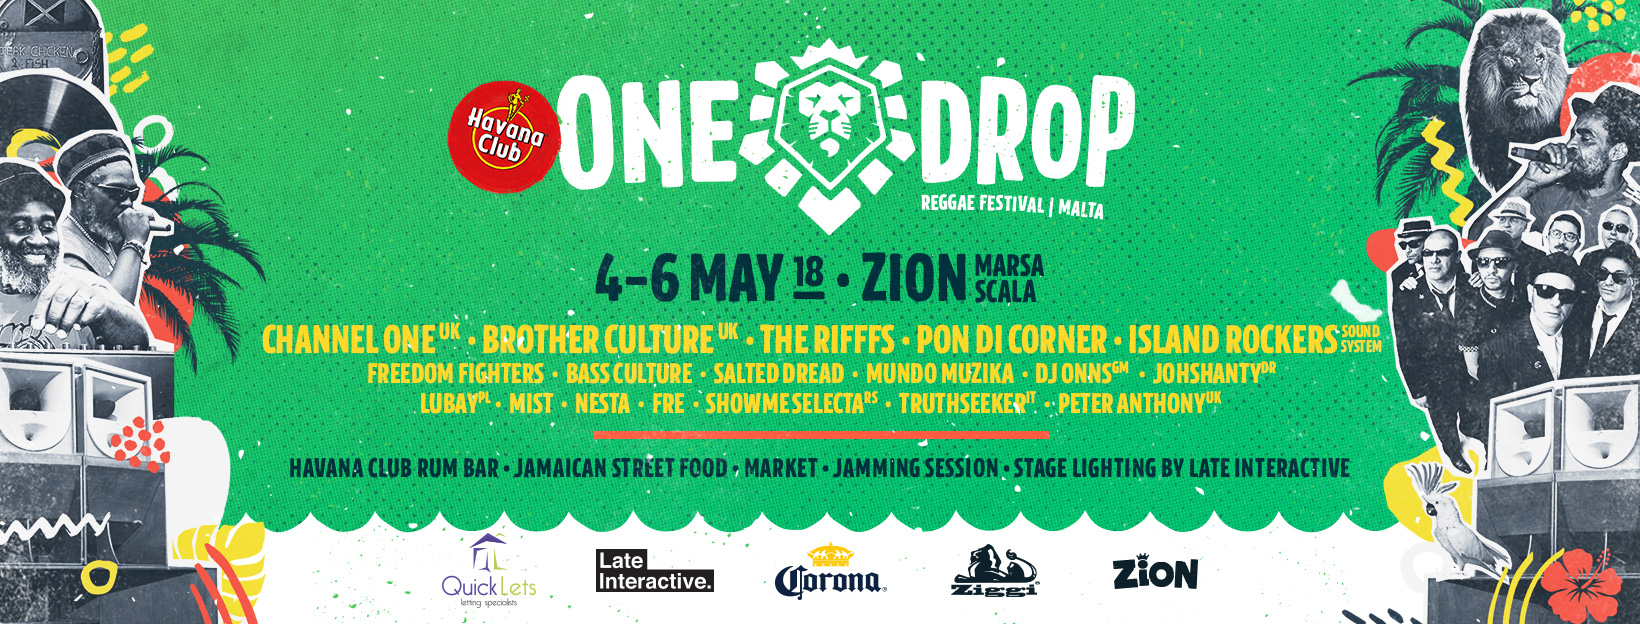 One Drop Reggae Festival 2018 - Trackage Scheme